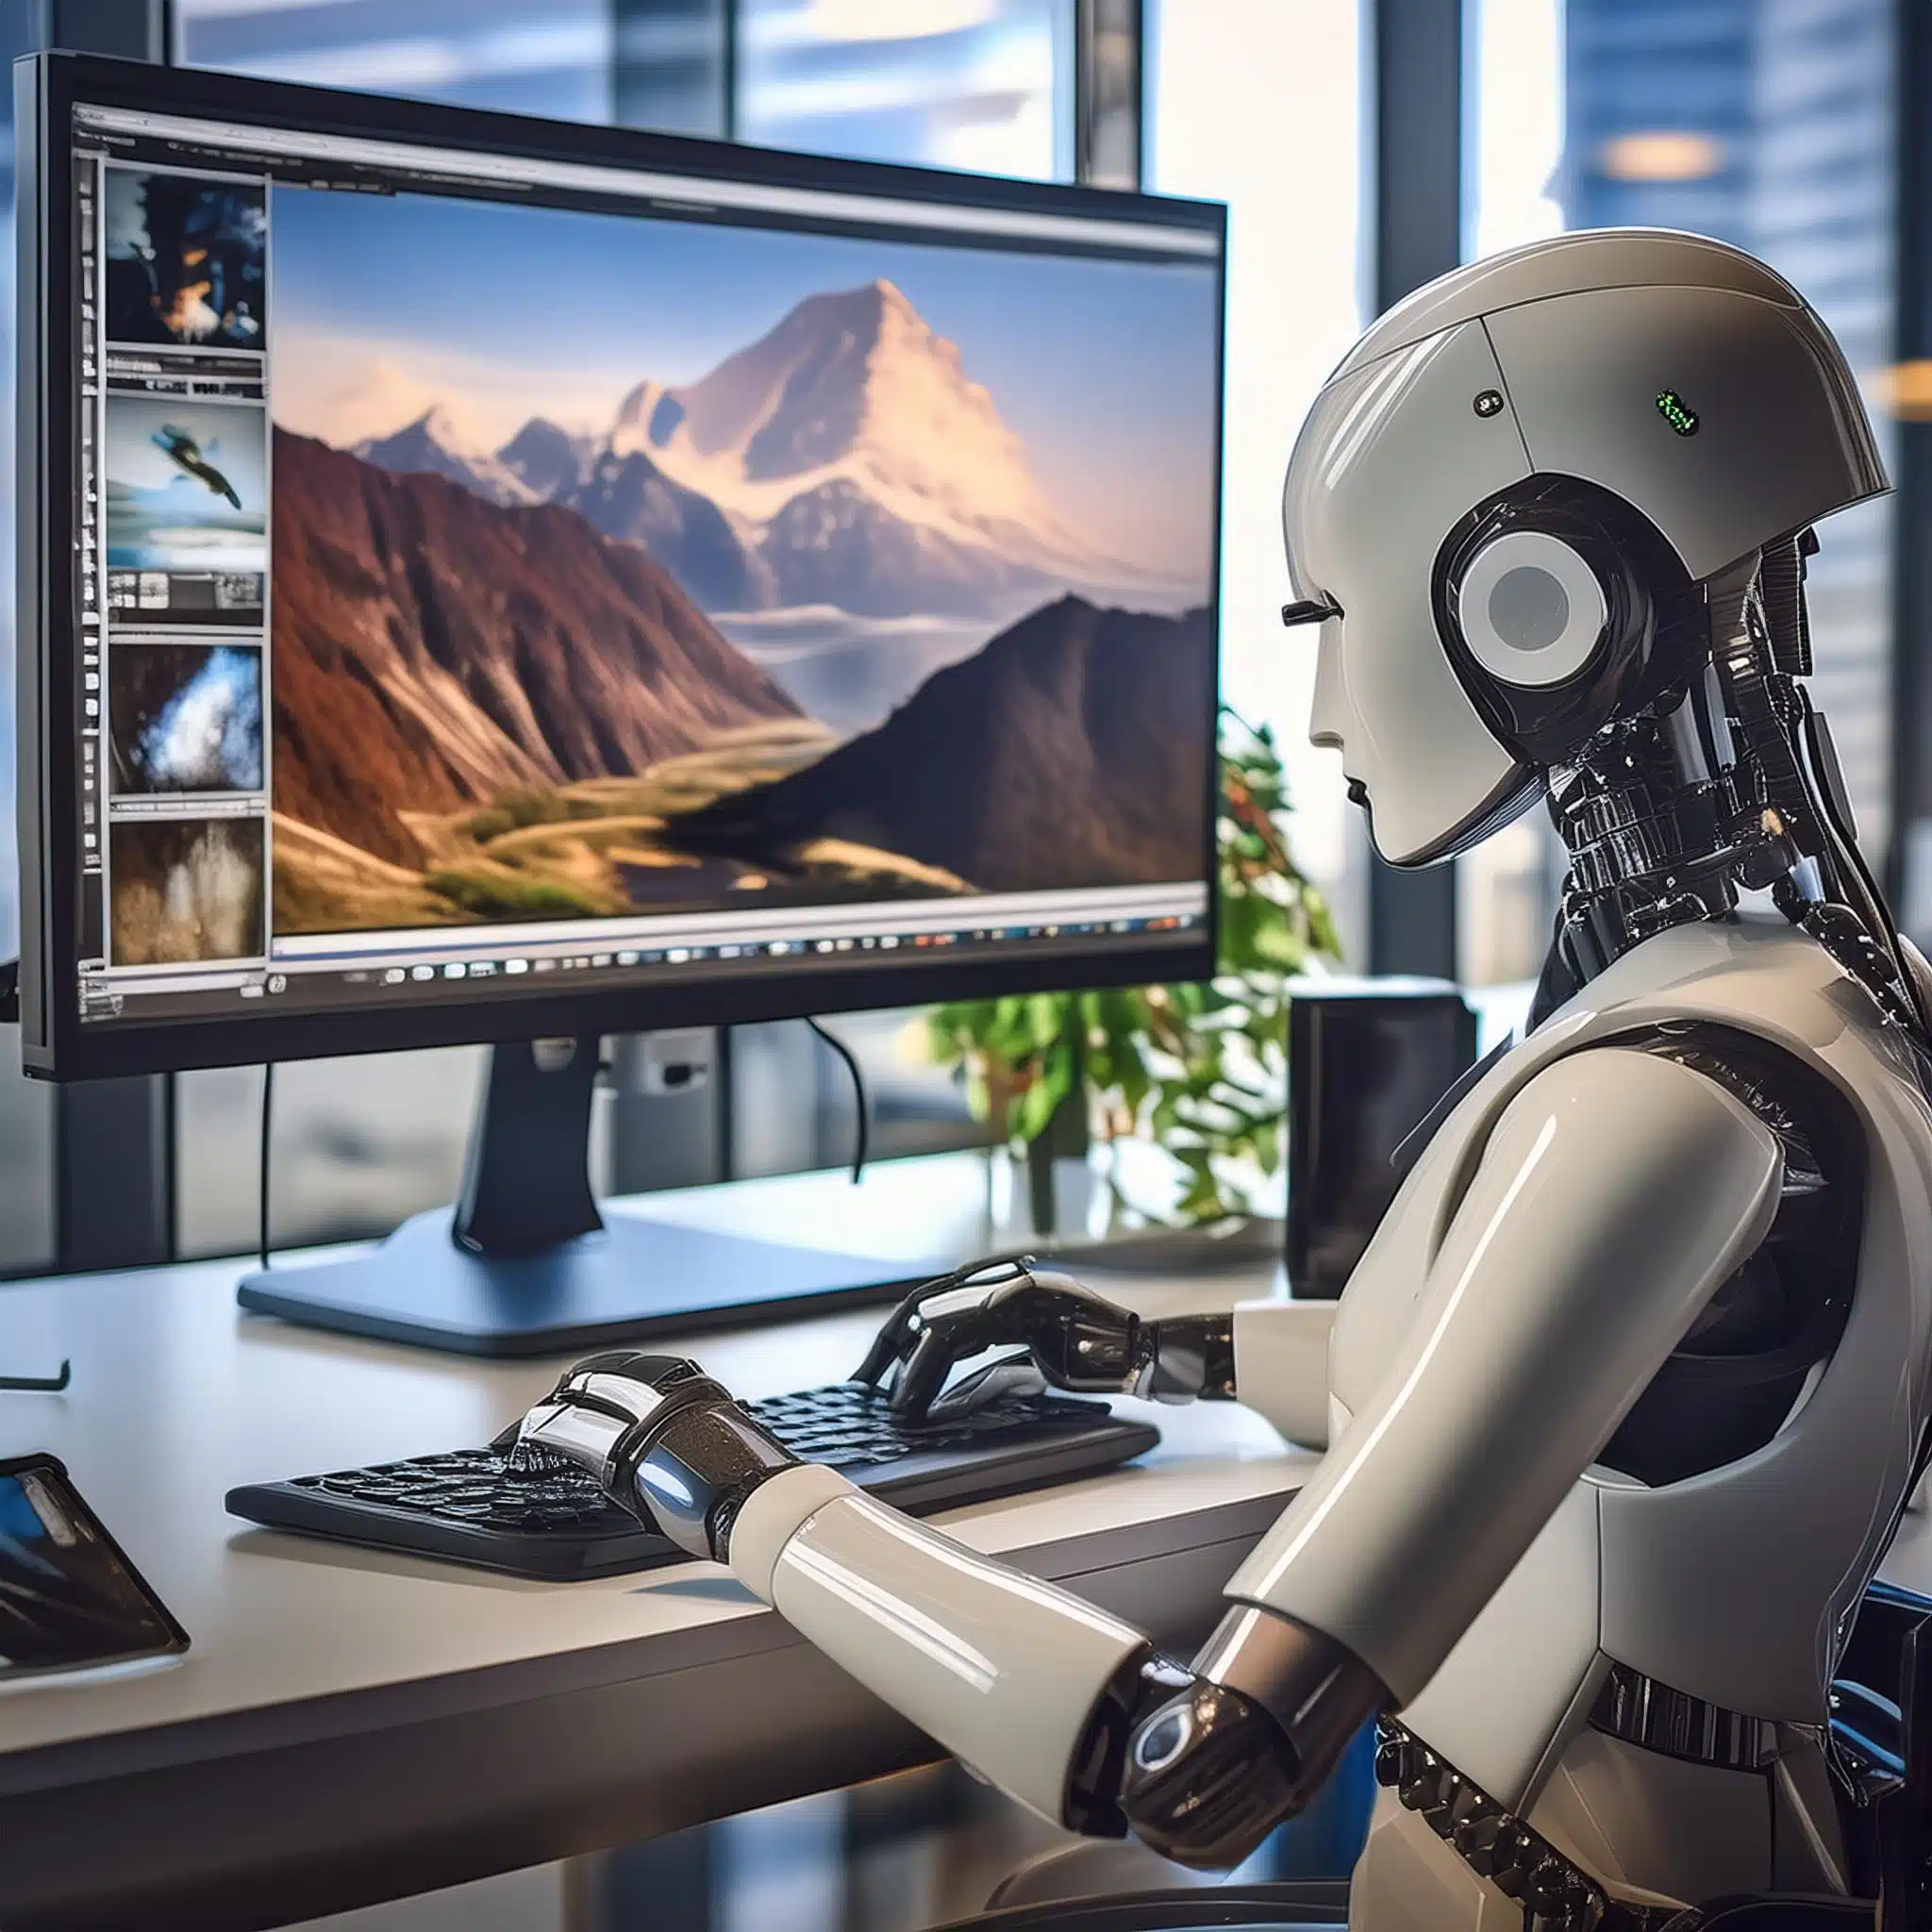 A robot sitting at a computer editing a photo